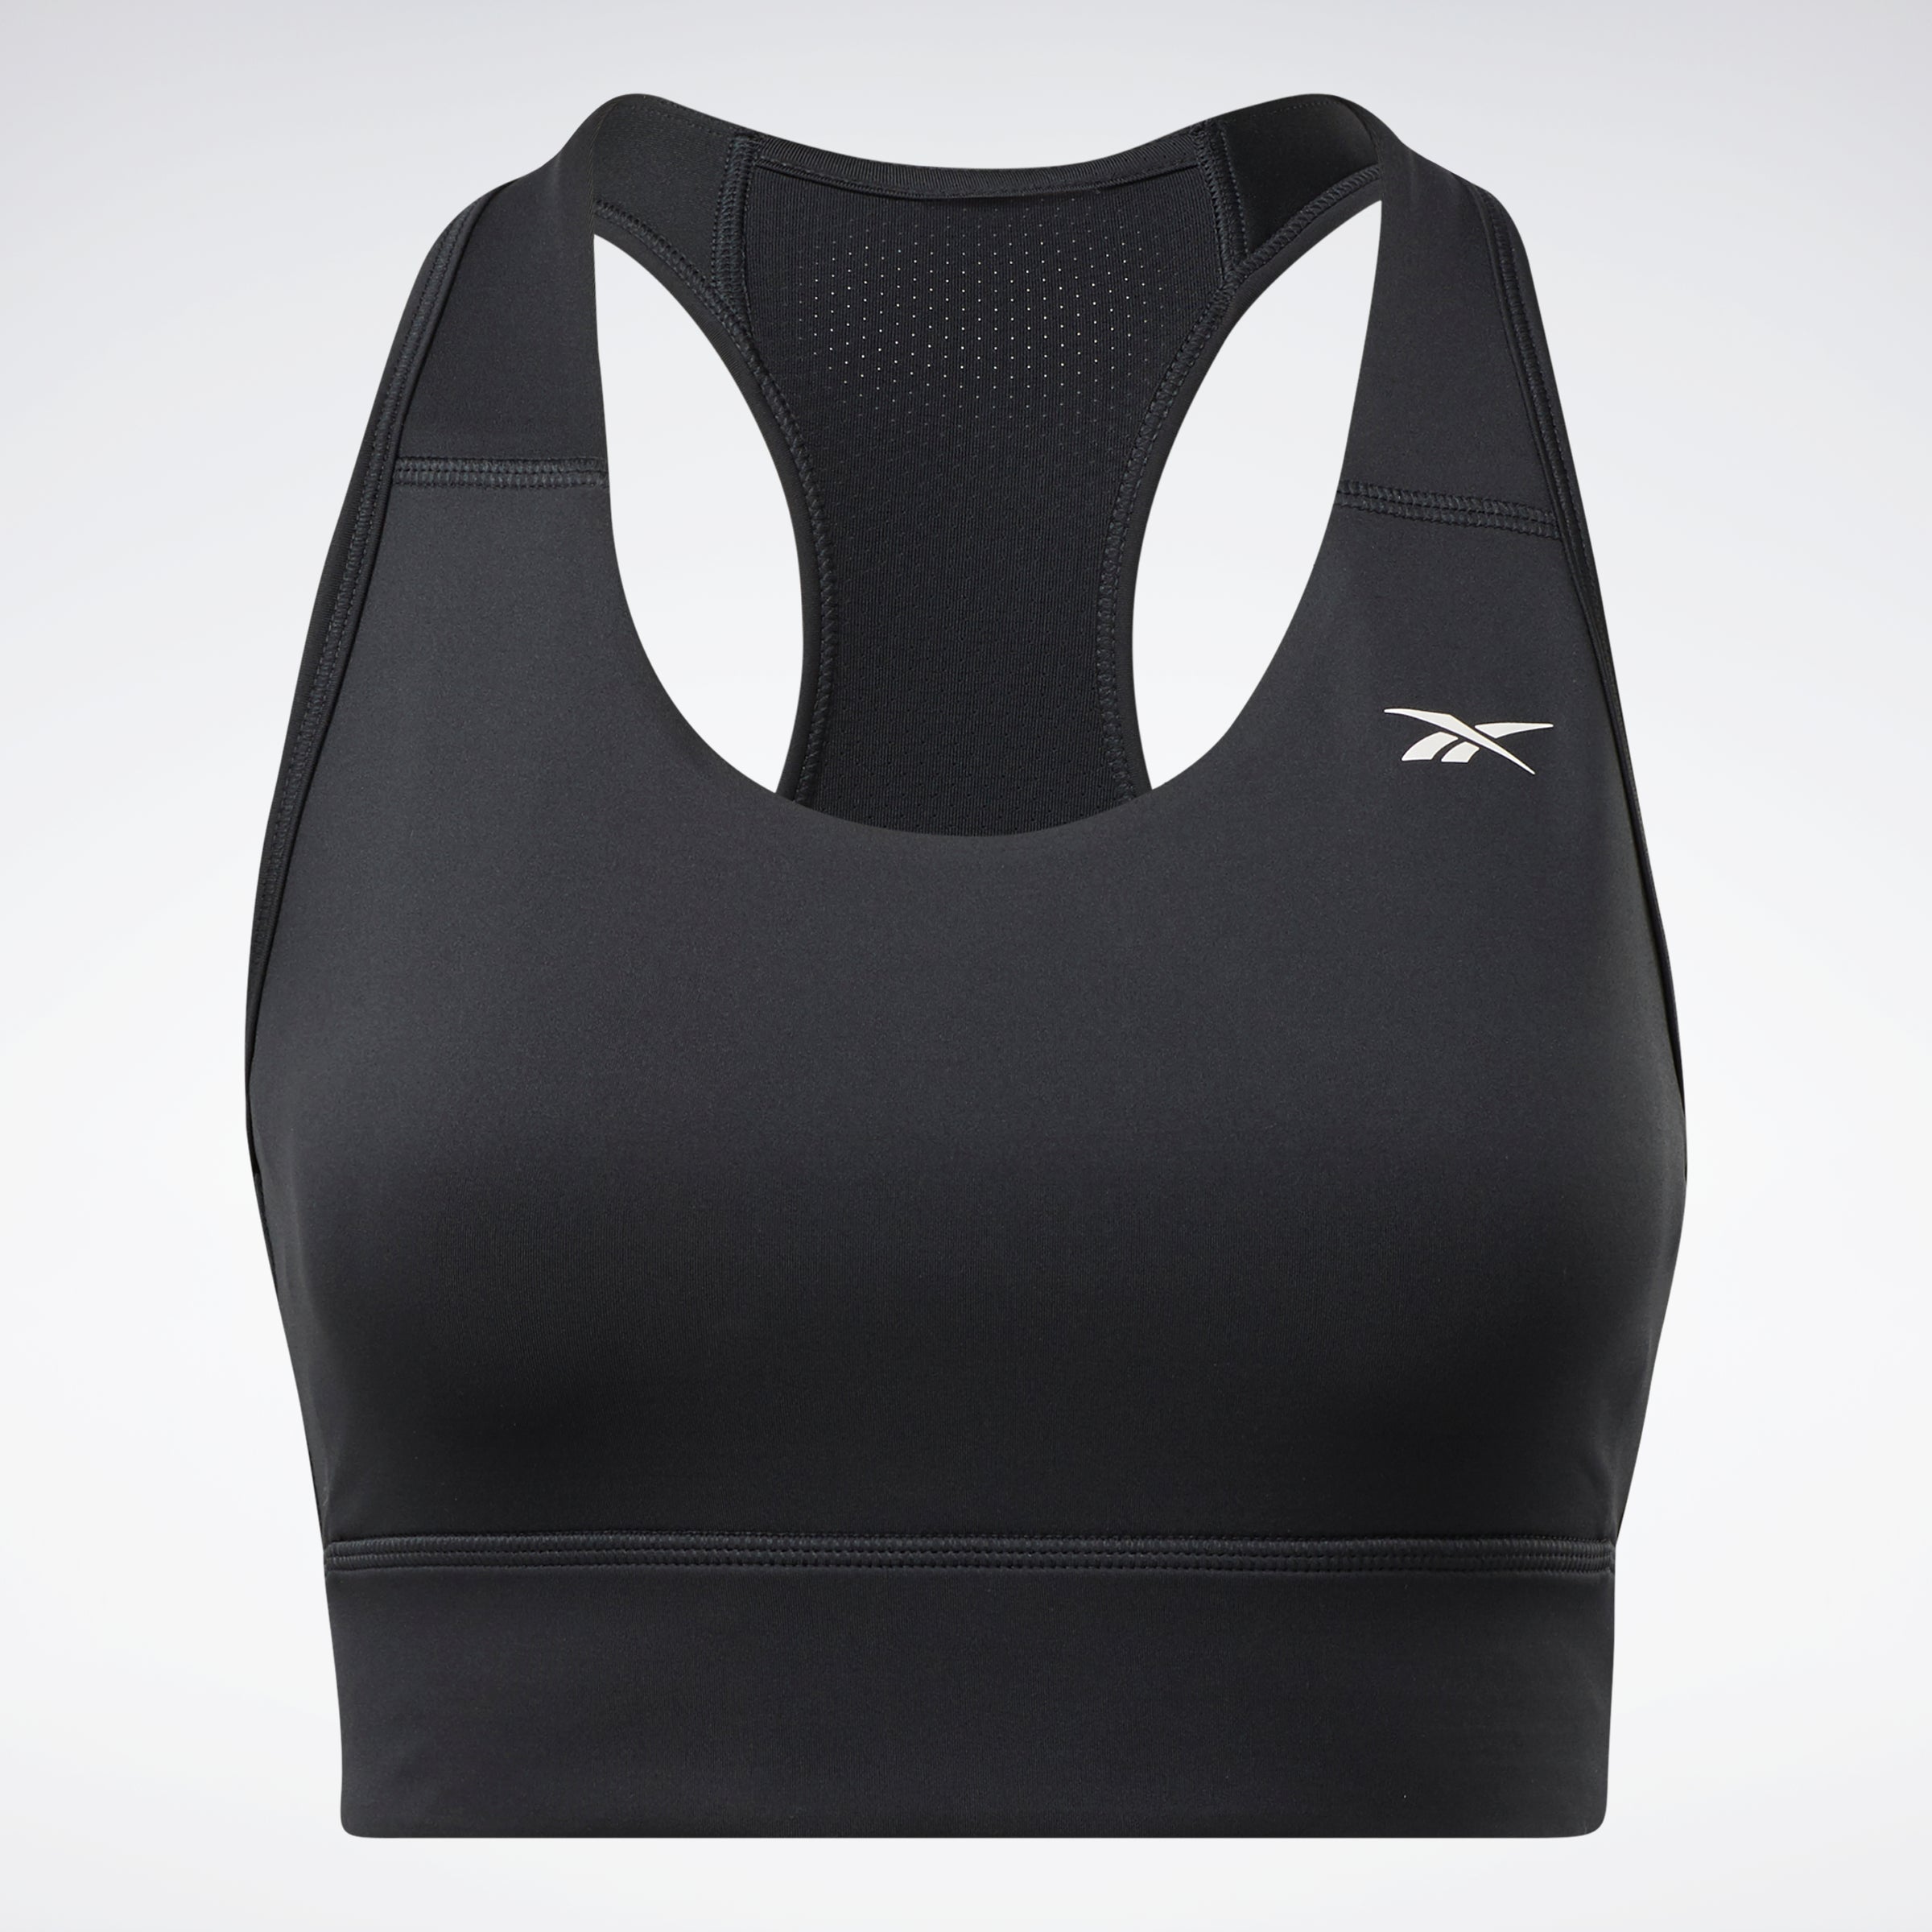 Reebok Women's Prime Essential Medium Impact Sports Bra with Back